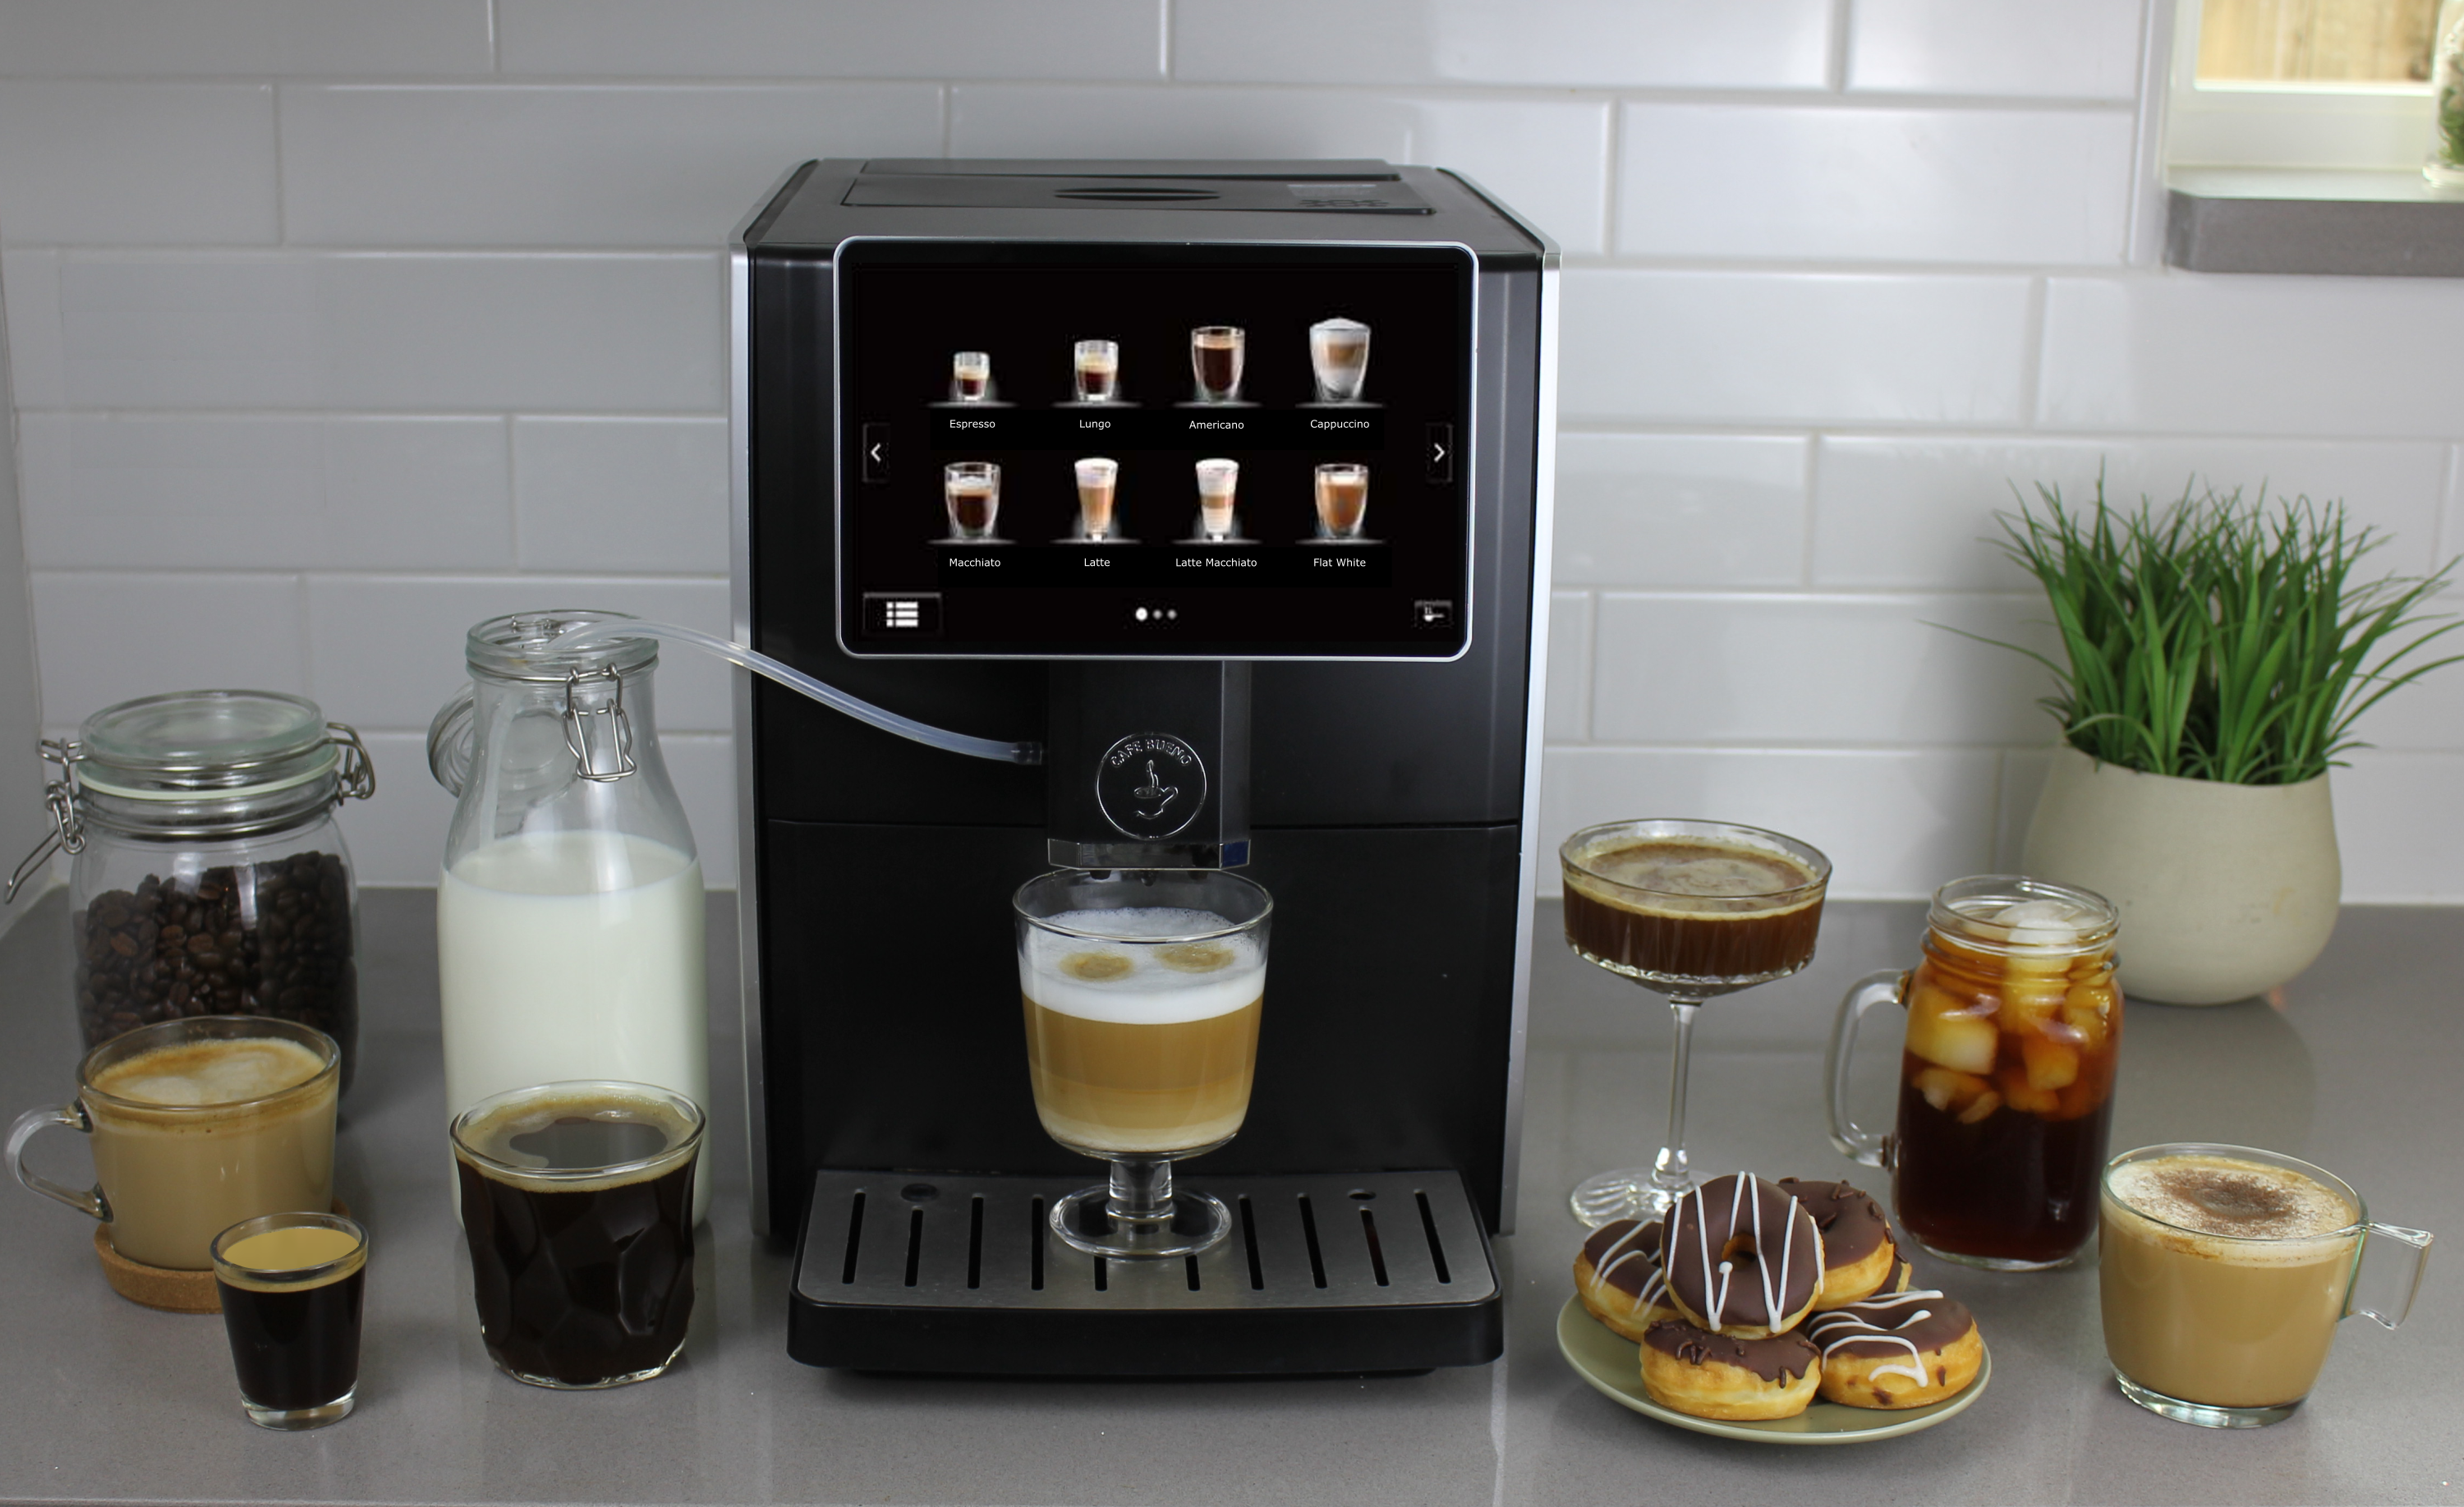 Cafe Bueno Super Automatic Espresso & Coffee Machine - Durable Automatic  Espresso Machine With Grinder and Milk Frother- Easy To Use Espresso Coffee